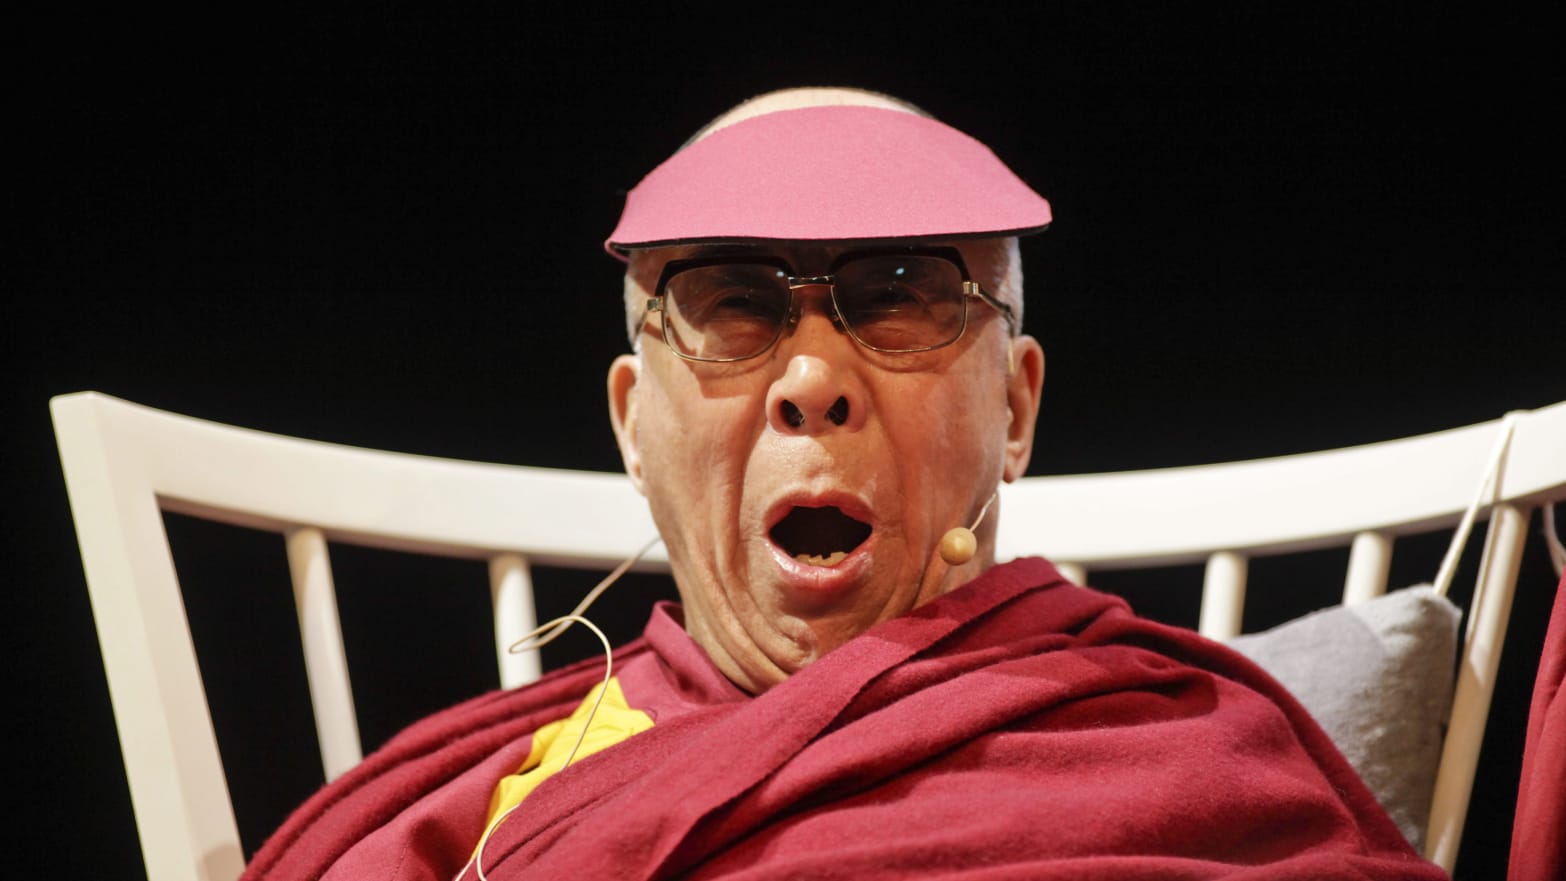 Dalai Lama Apologizes for Asking Young Boy to Suck My Tongue